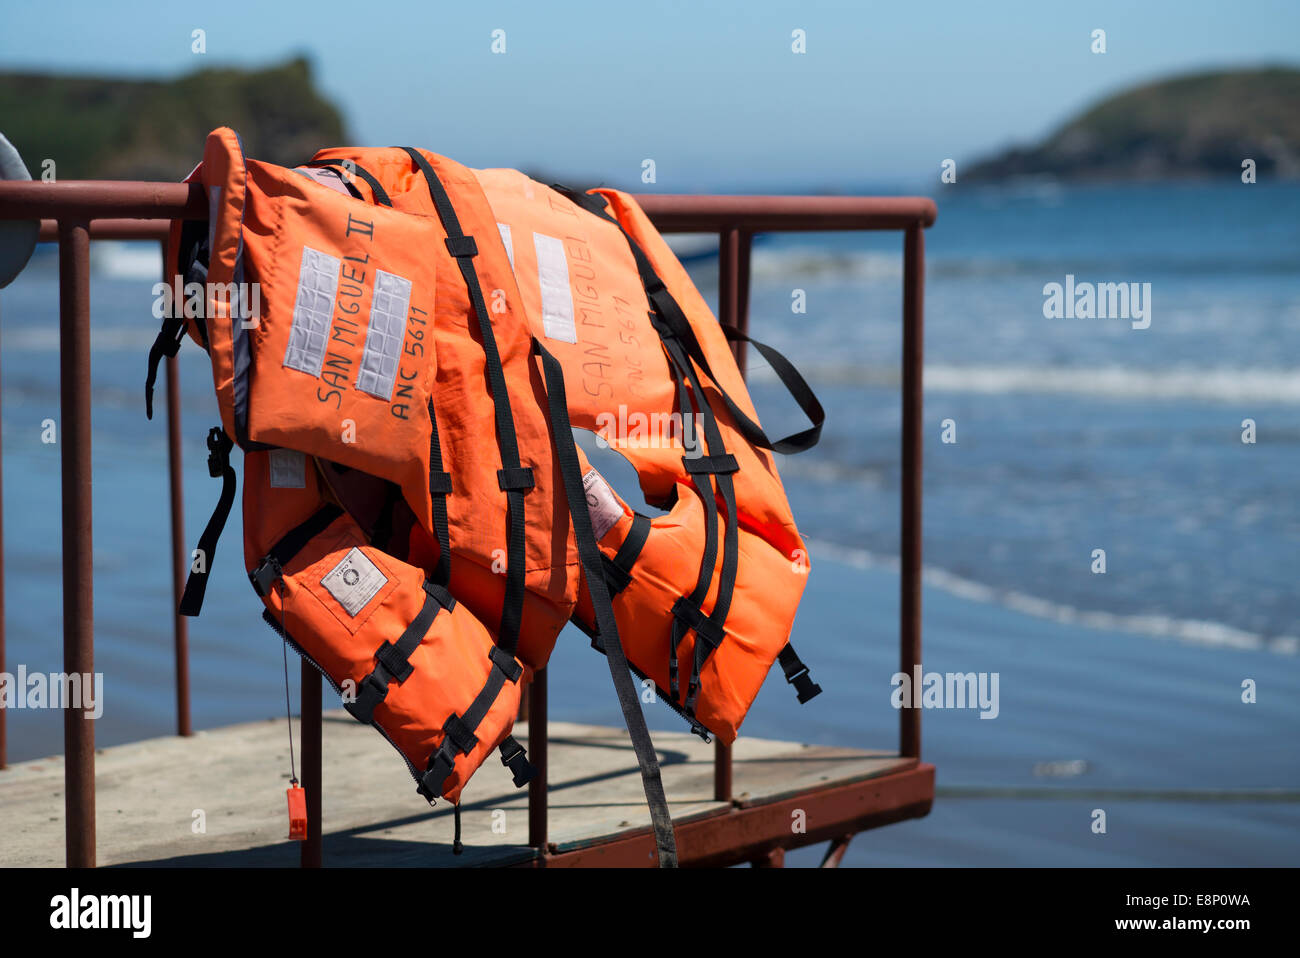 Life-jacket on the beach ready for use. Stock Photo